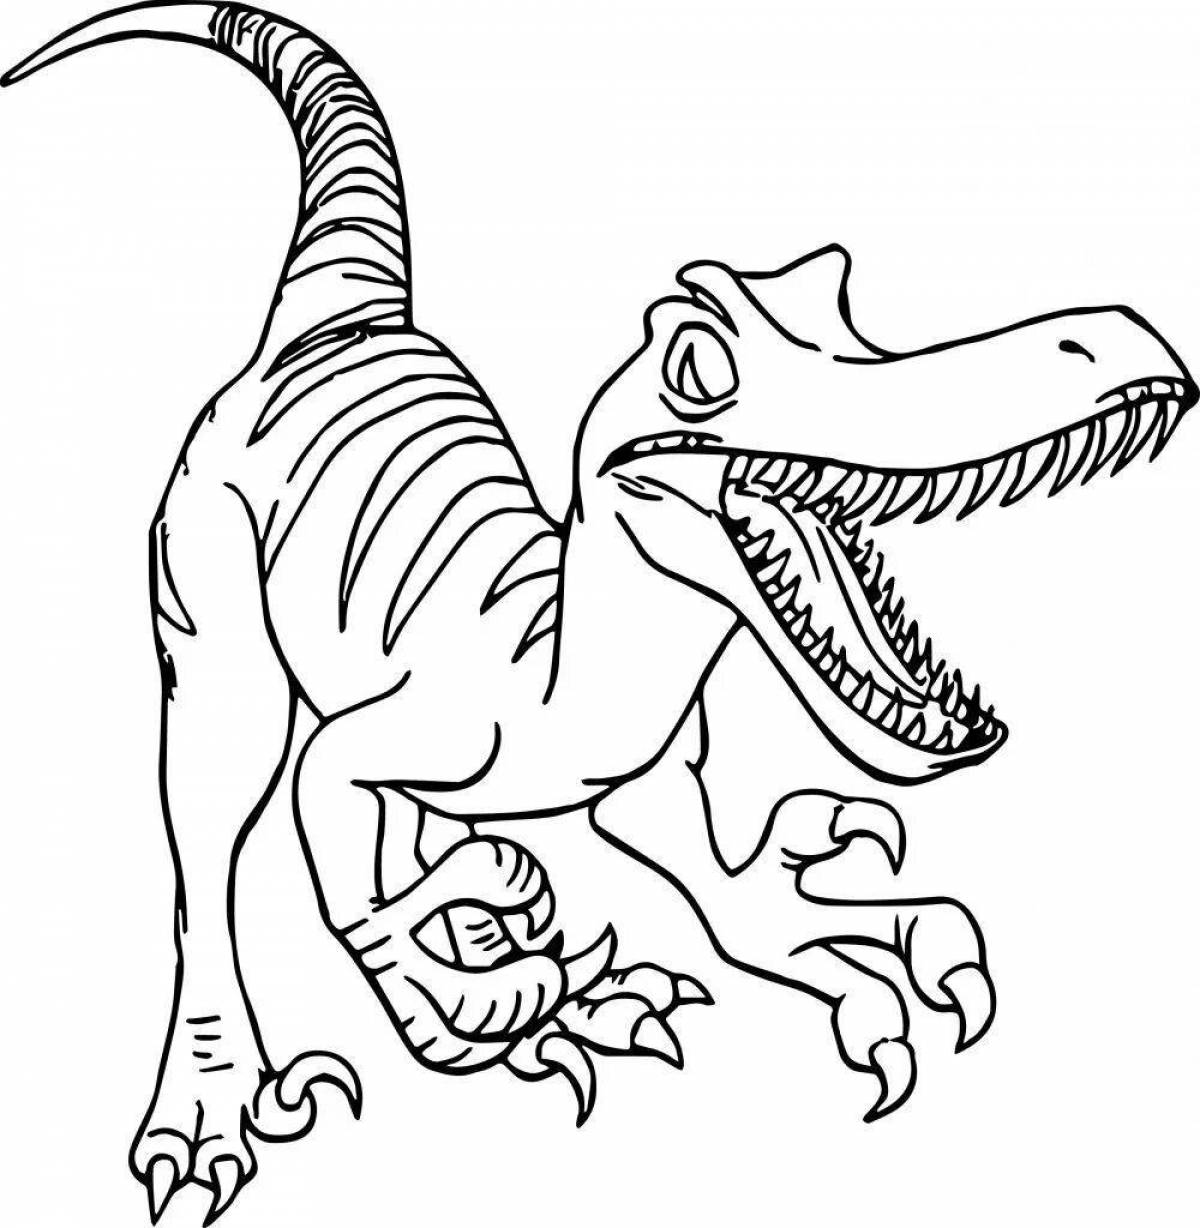 Fancy dinosaur coloring book